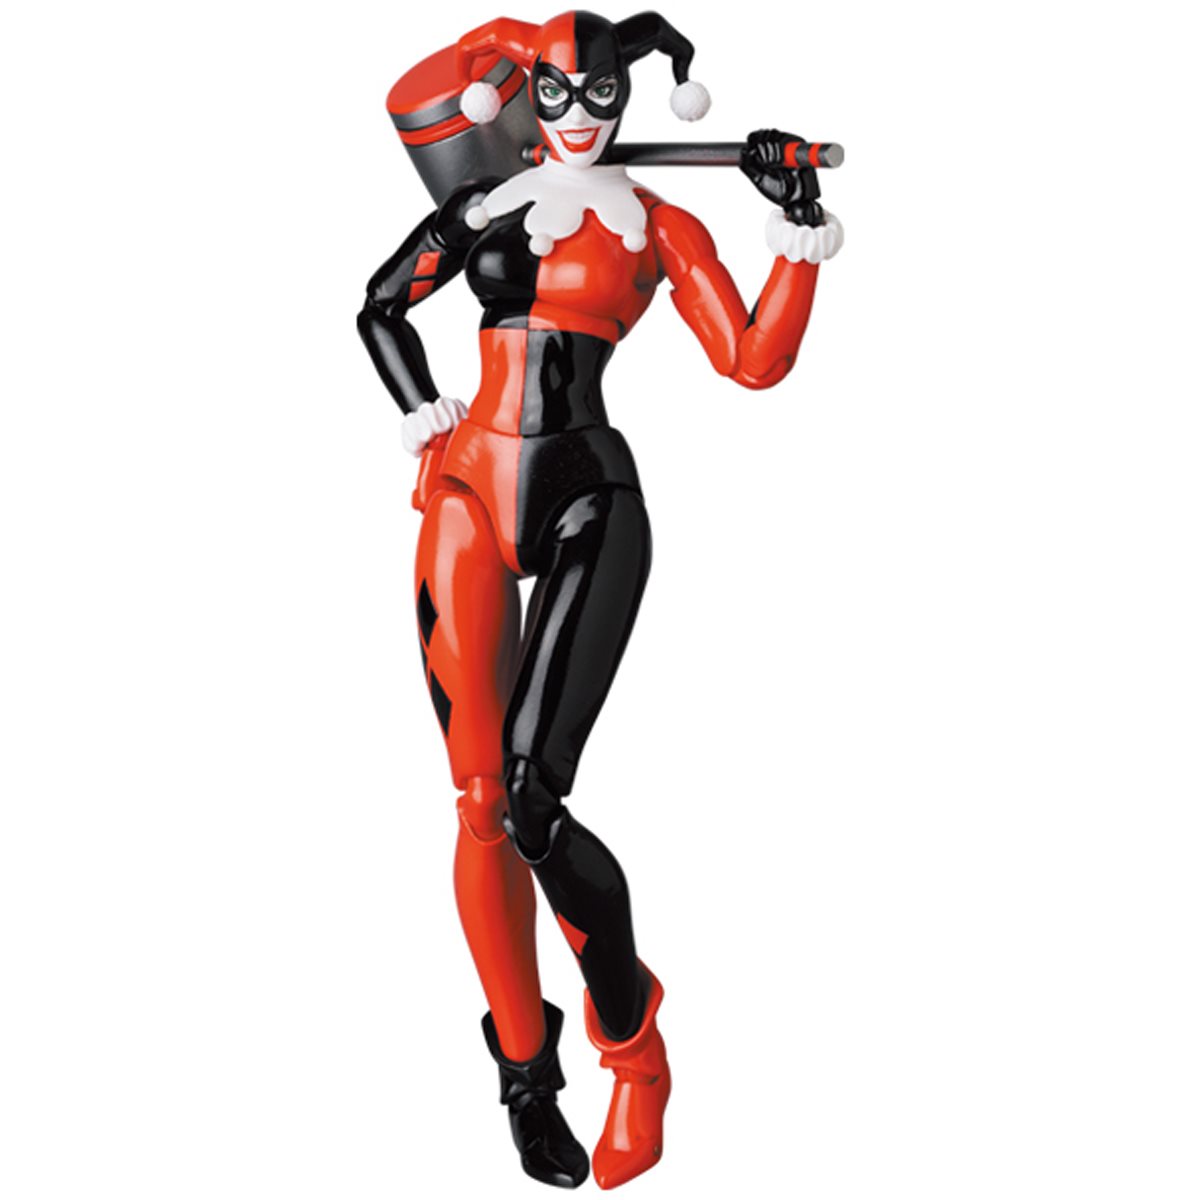 Cyborg Action Figure for sale online Mattel Harley Quinn